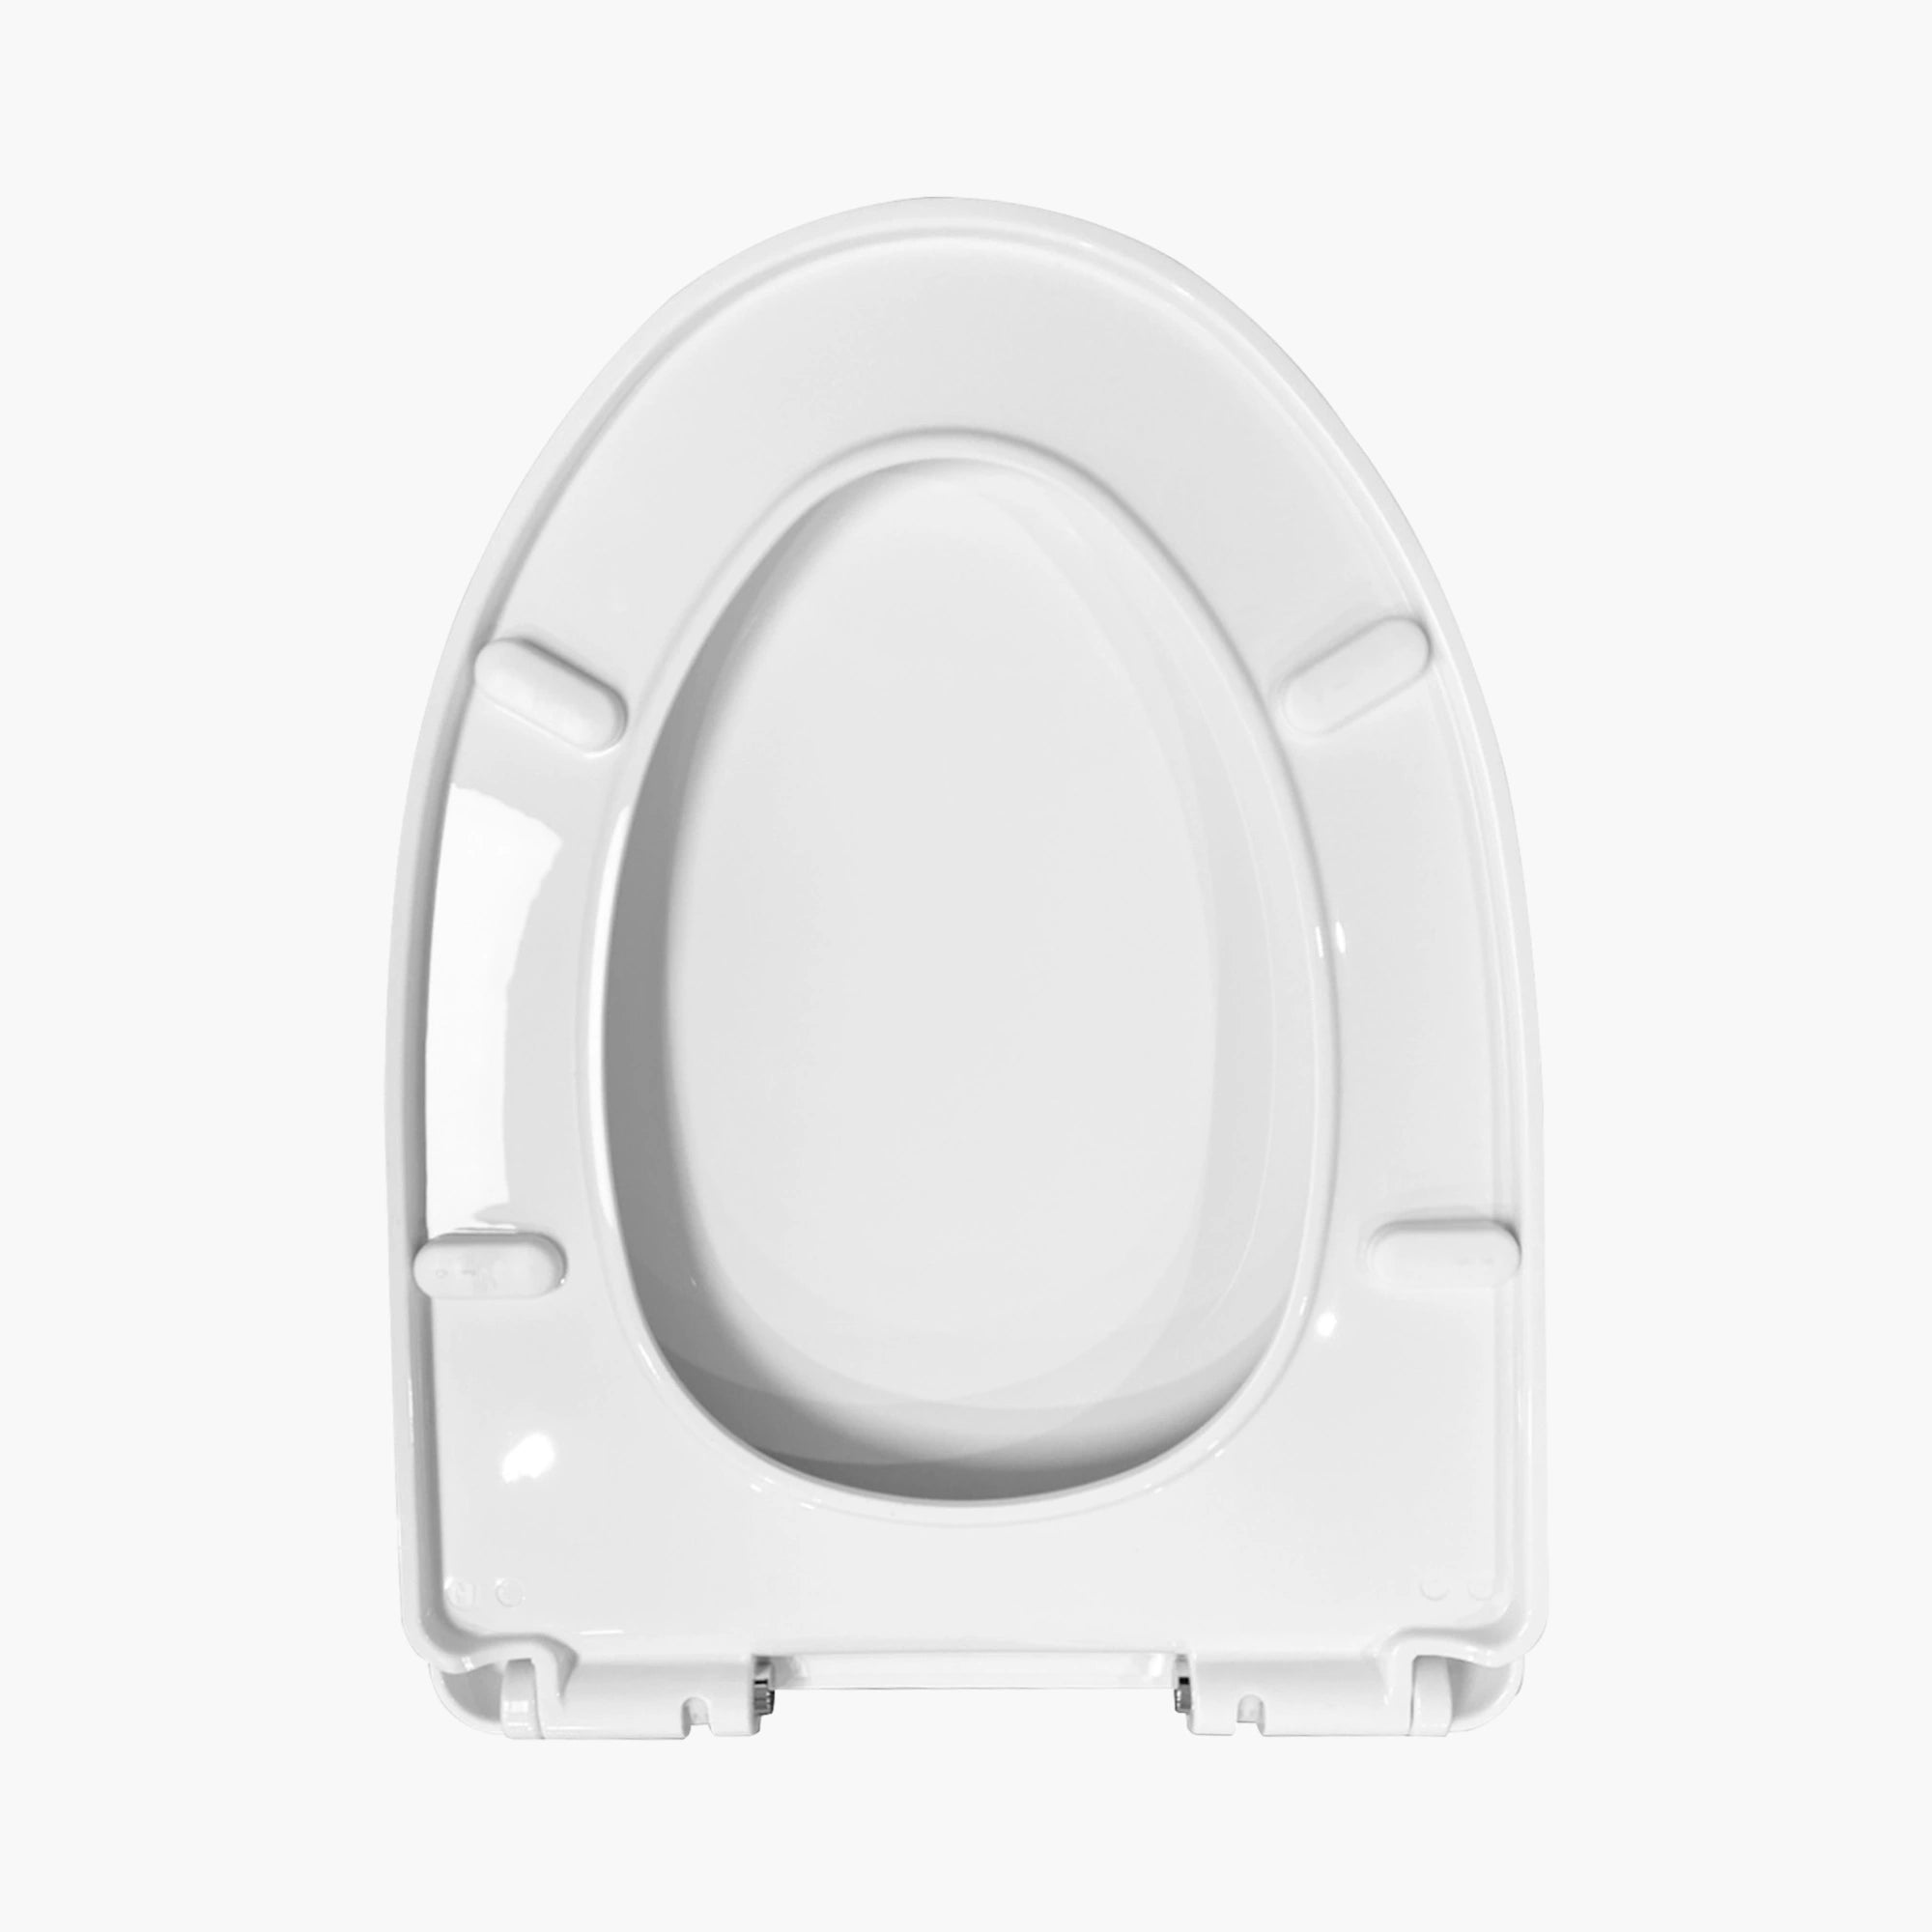 HOROW T0334W Toilet Soft Close Toilet Seat Model HWPP-134